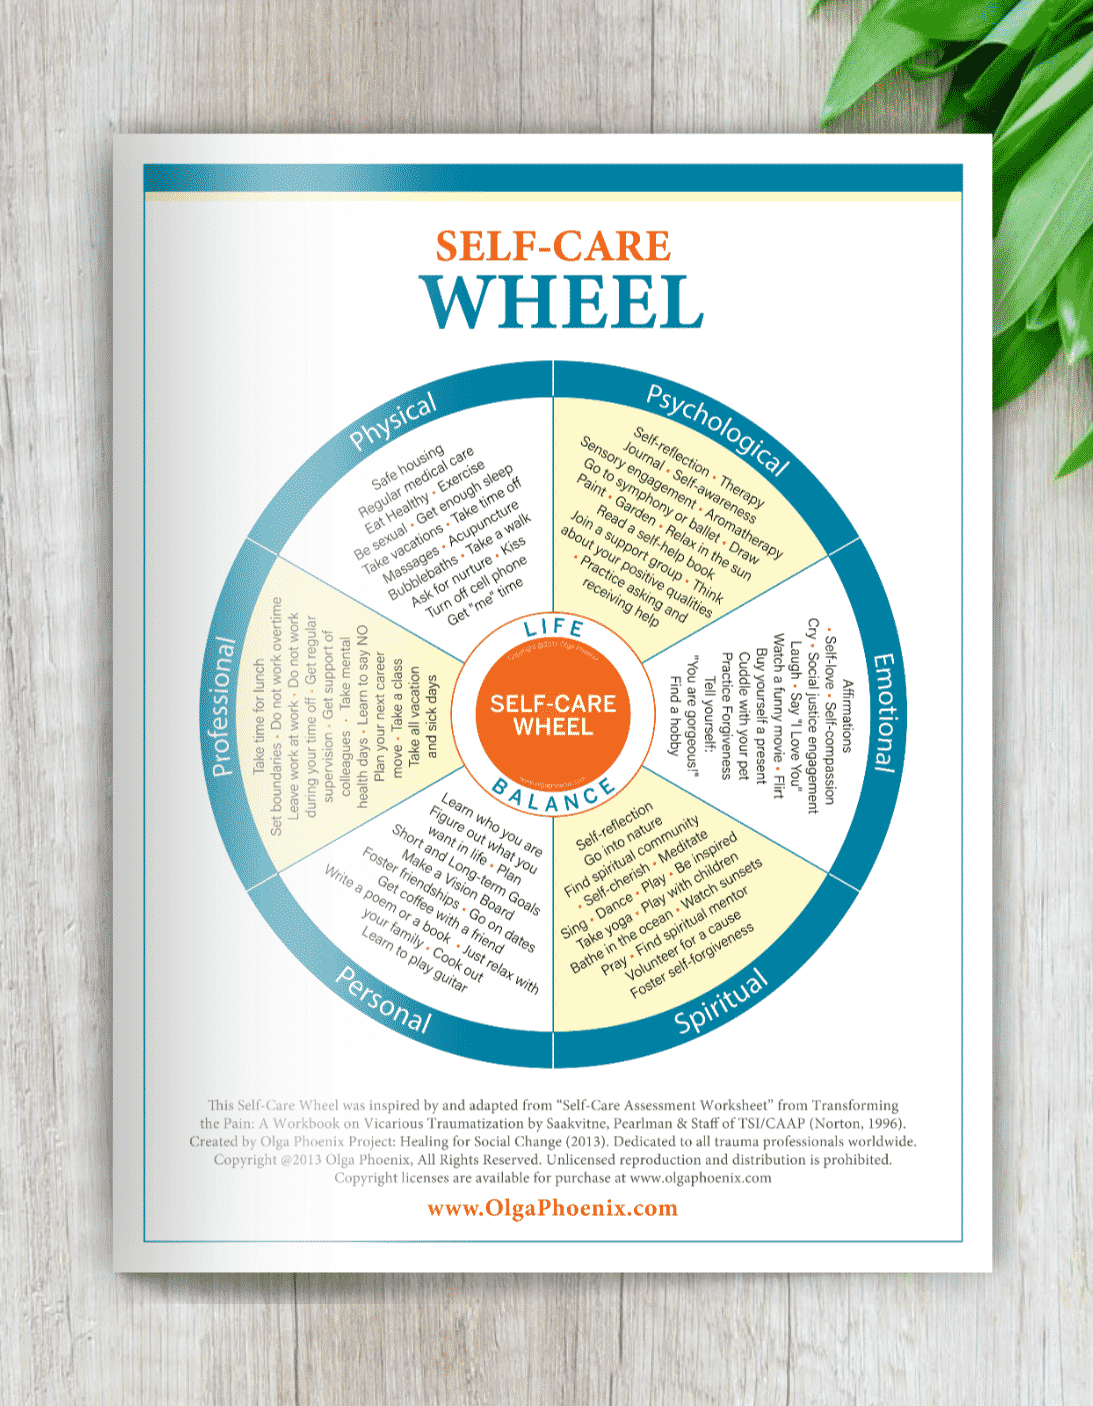 Self-Care Wheel Worlds #1 Self Care Tool!